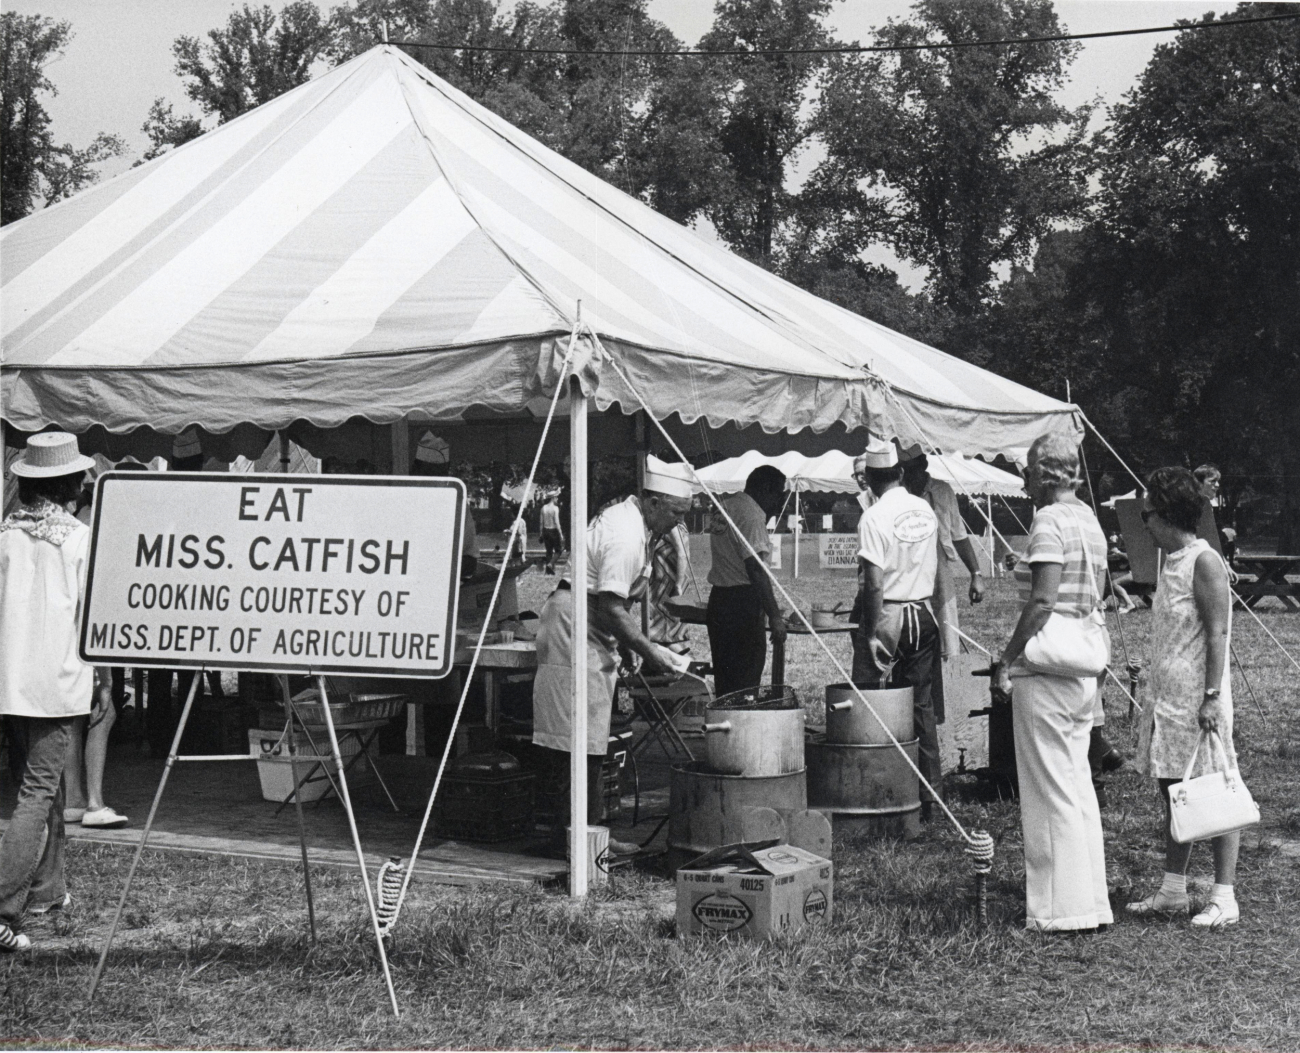 Eat Mississippi Catfish sign